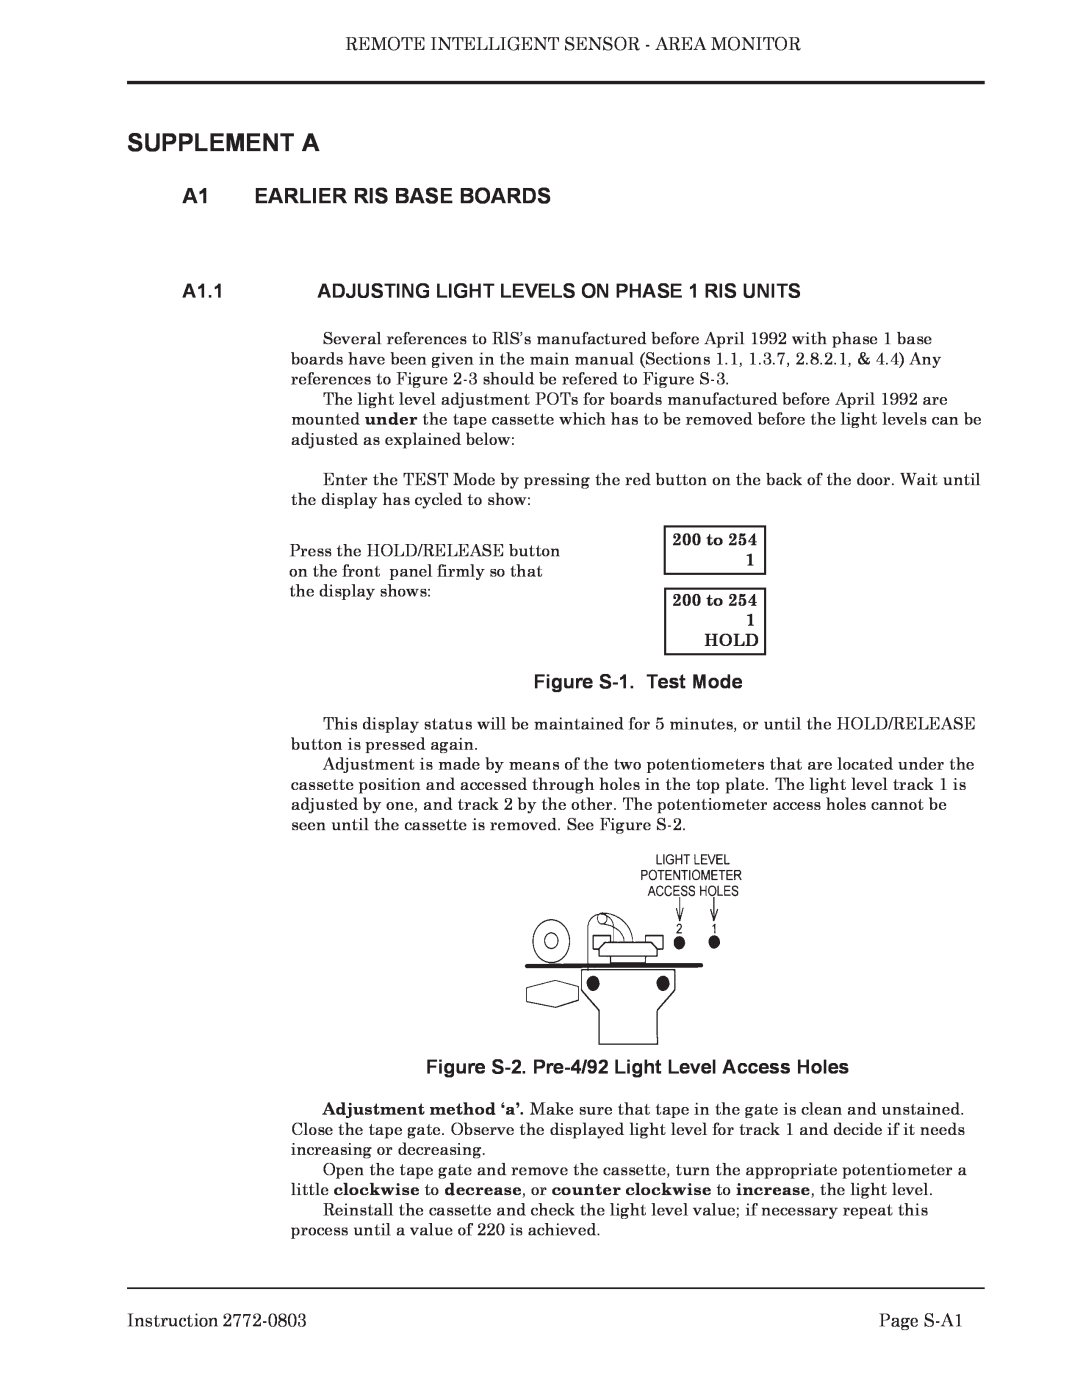 Bacharach 2772-0803 A1 EARLIER RIS BASE BOARDS, A1.1, Figure S-1. Test Mode, Figure S-2. Pre-4/92 Light Level Access Holes 